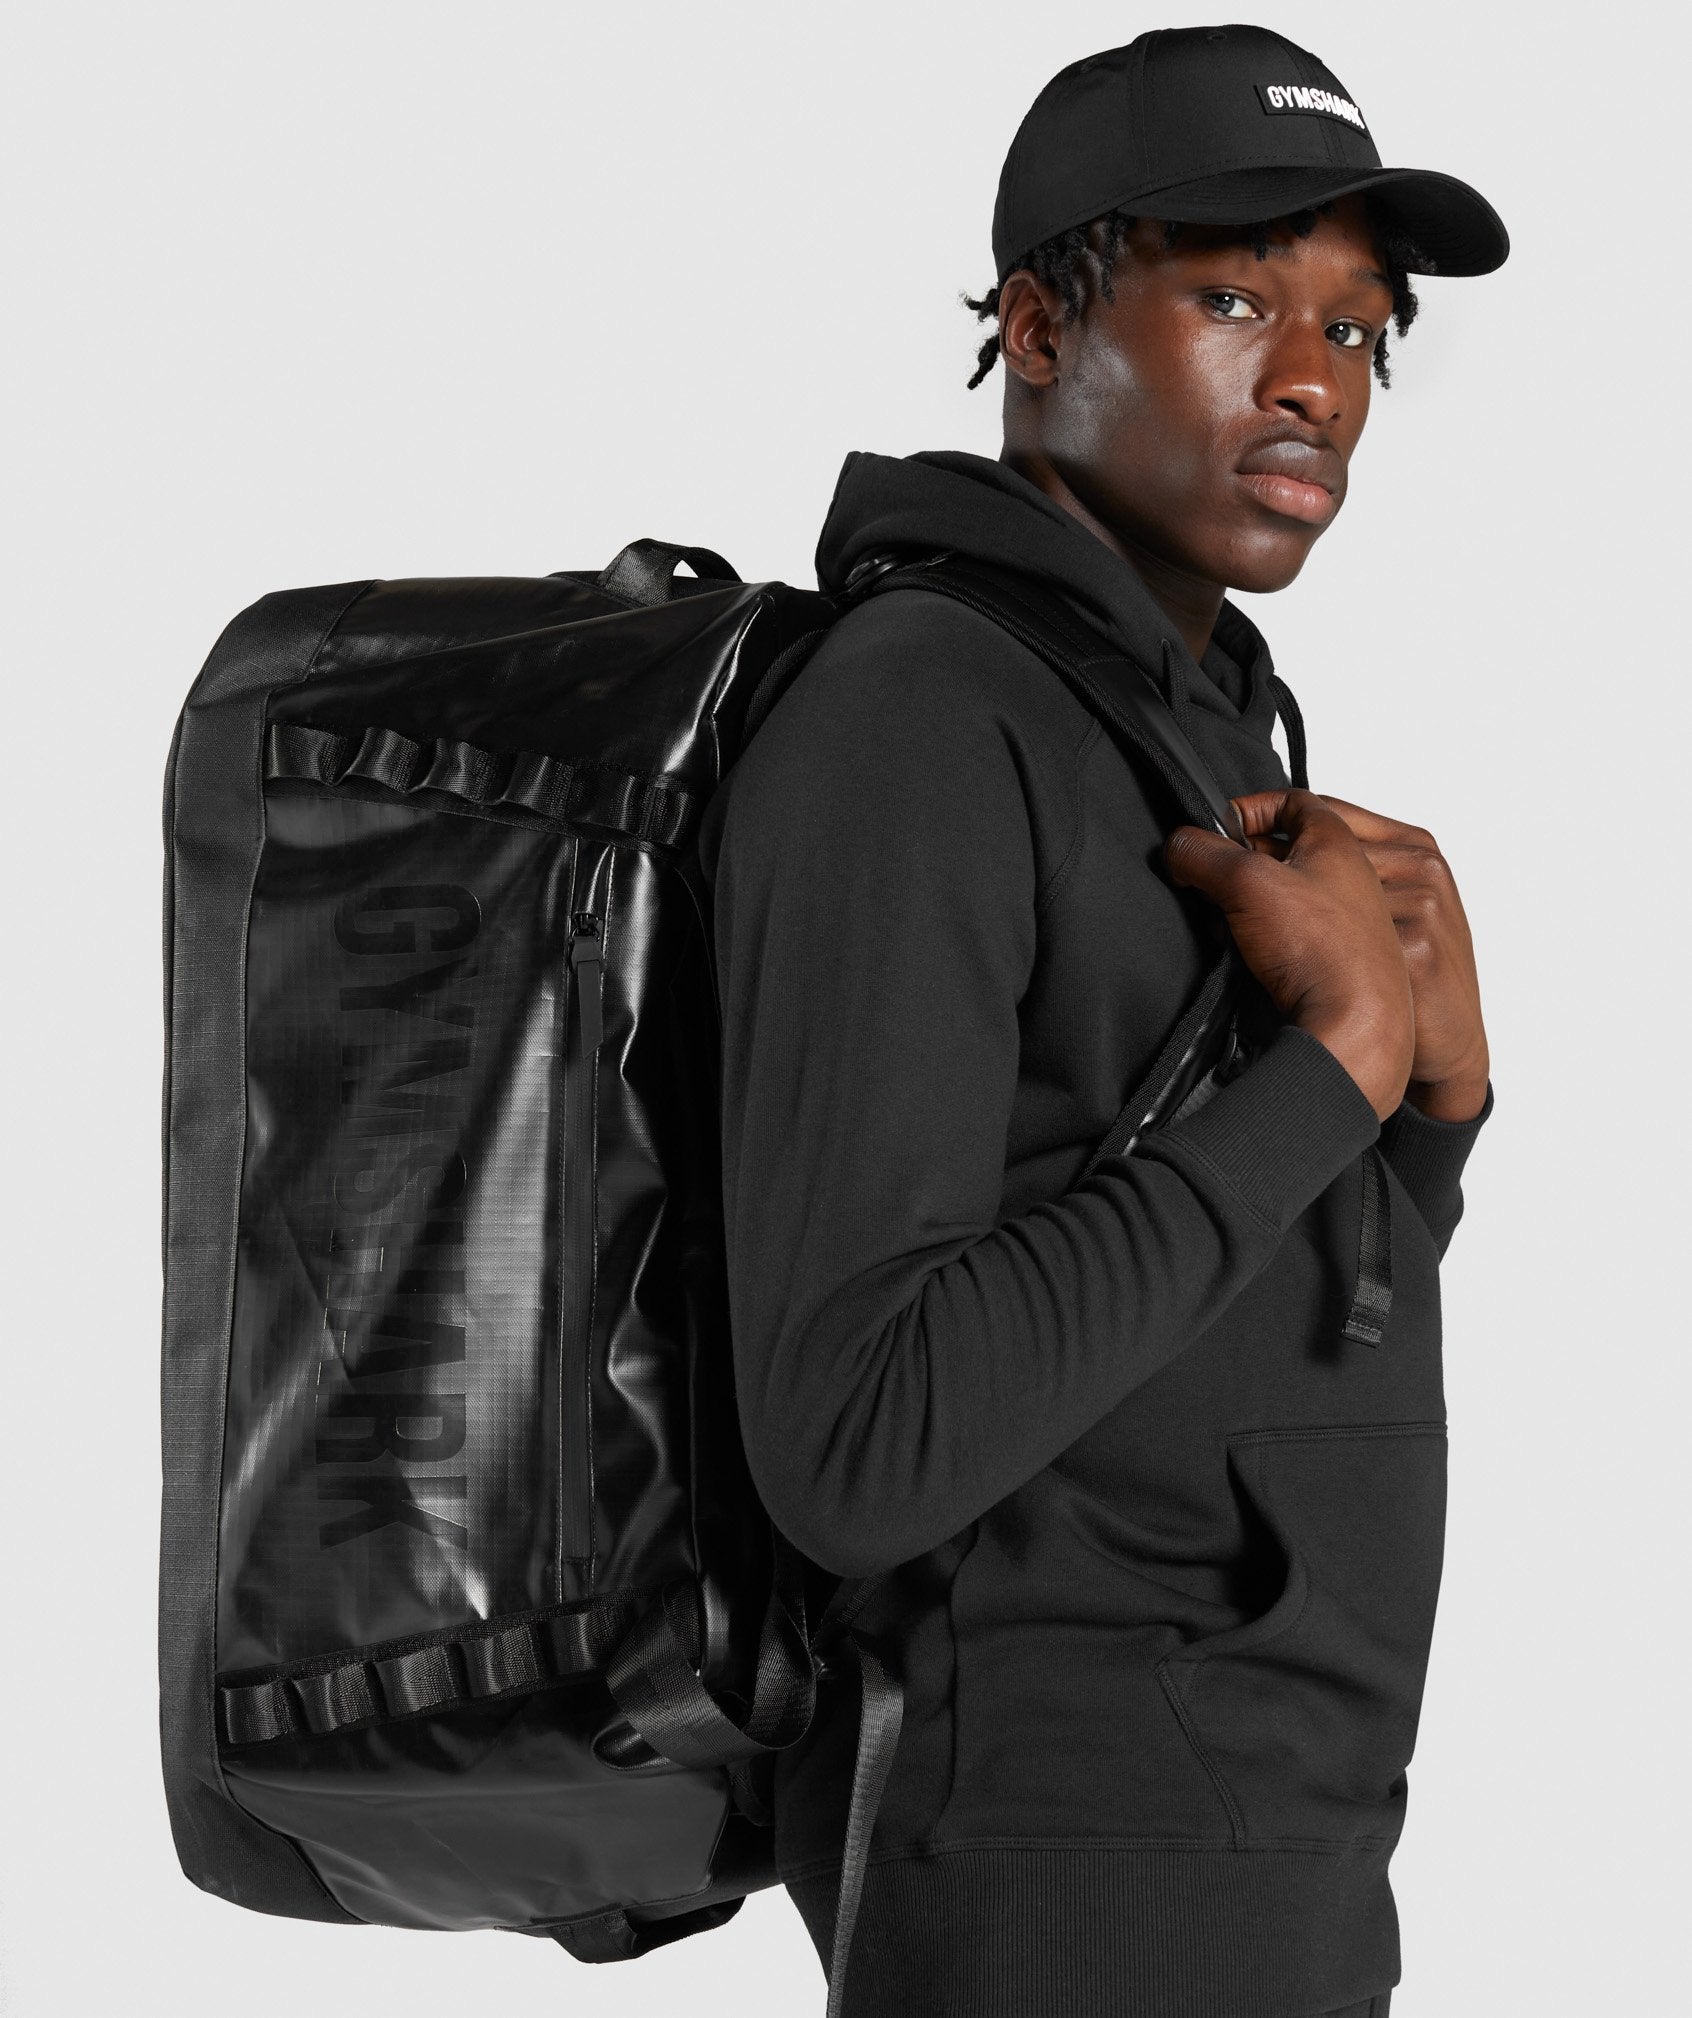 X-Series Duffle Bag in Black - view 3